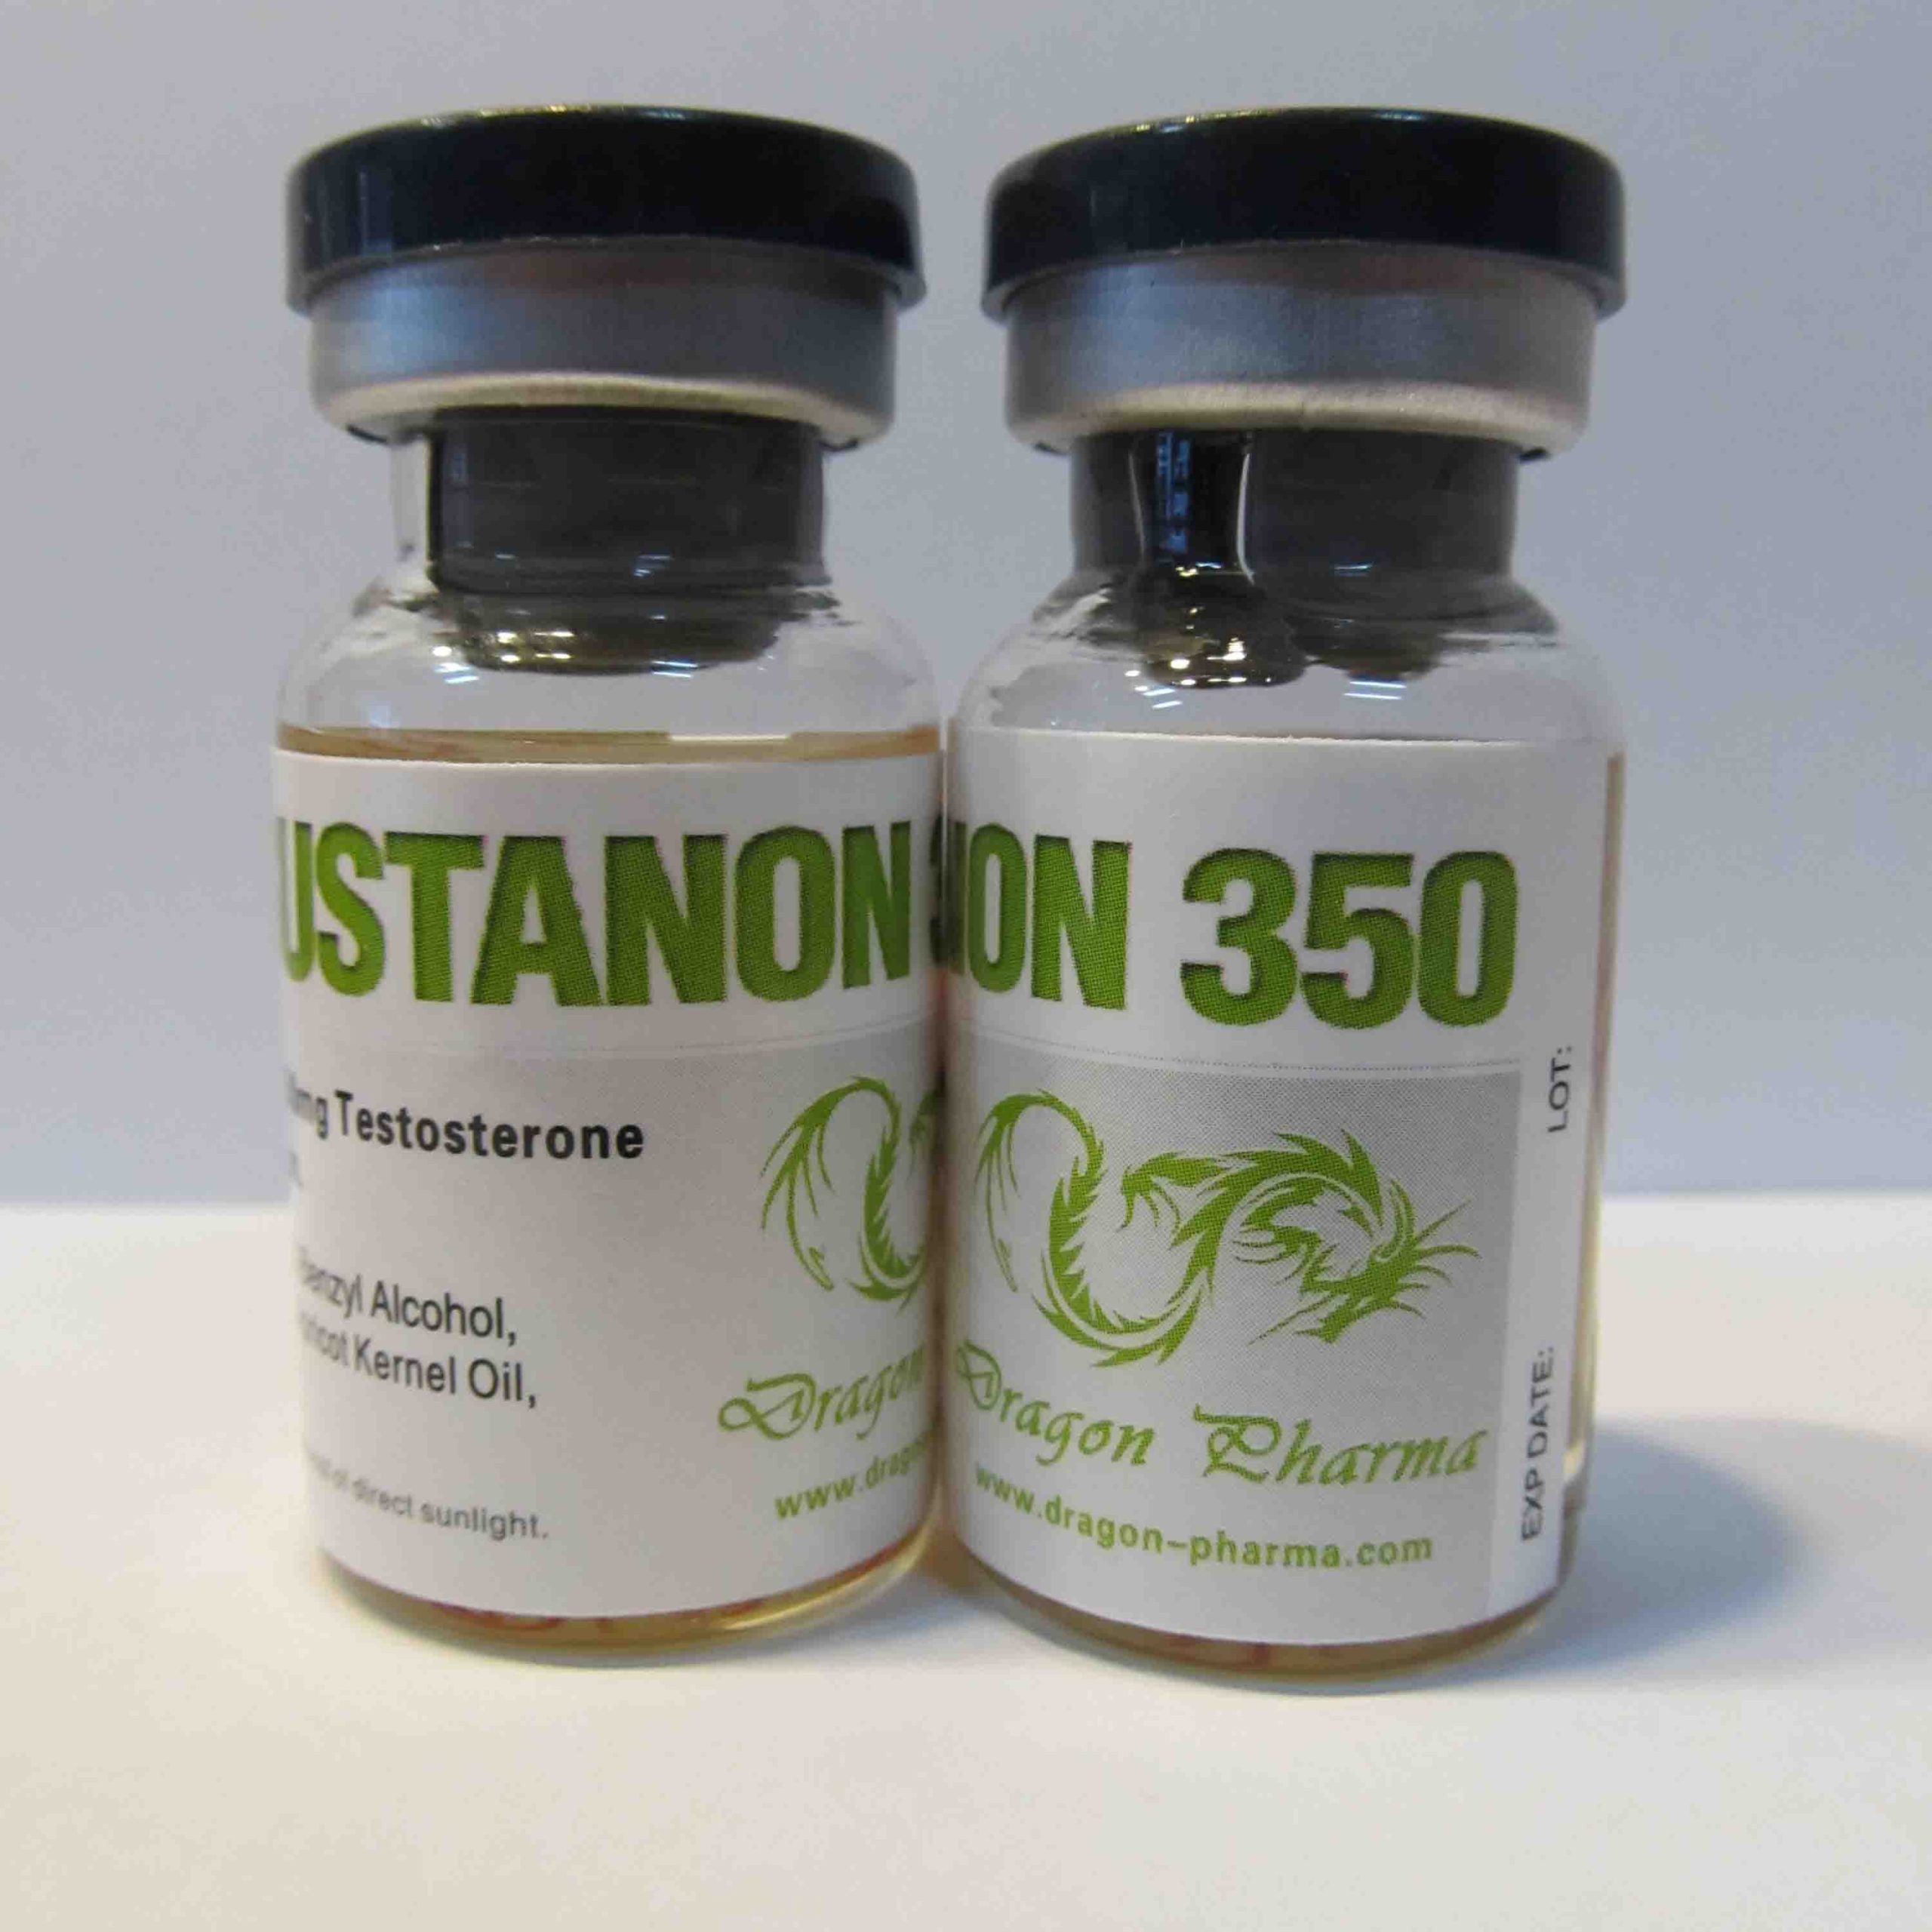 Sustanon 350 (testosterone mix)